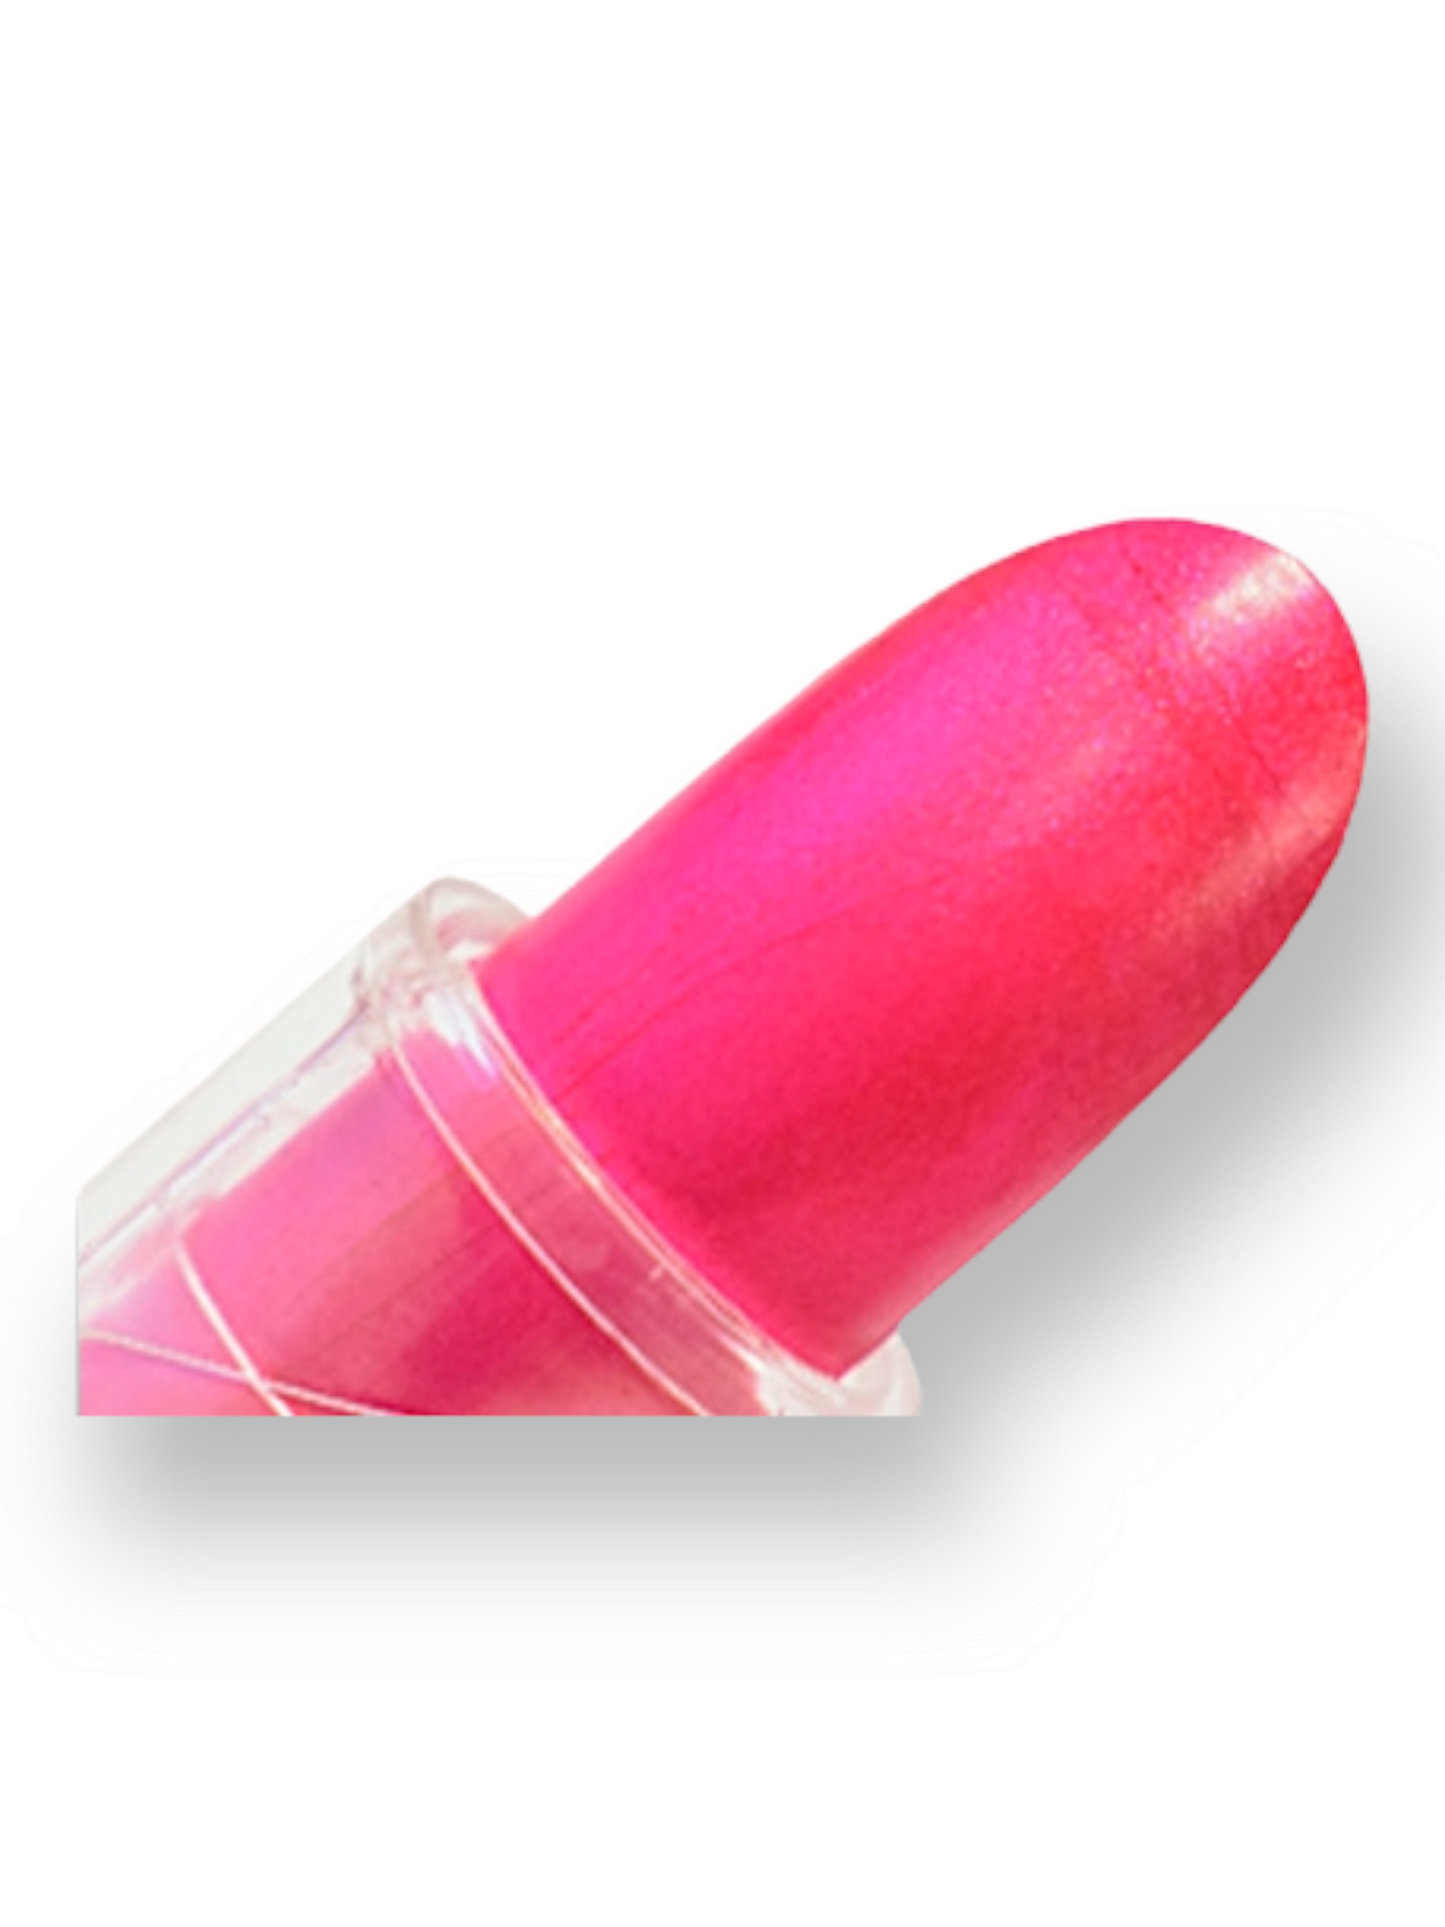 GRIMAS Lipstick 7-97 Electric Pink